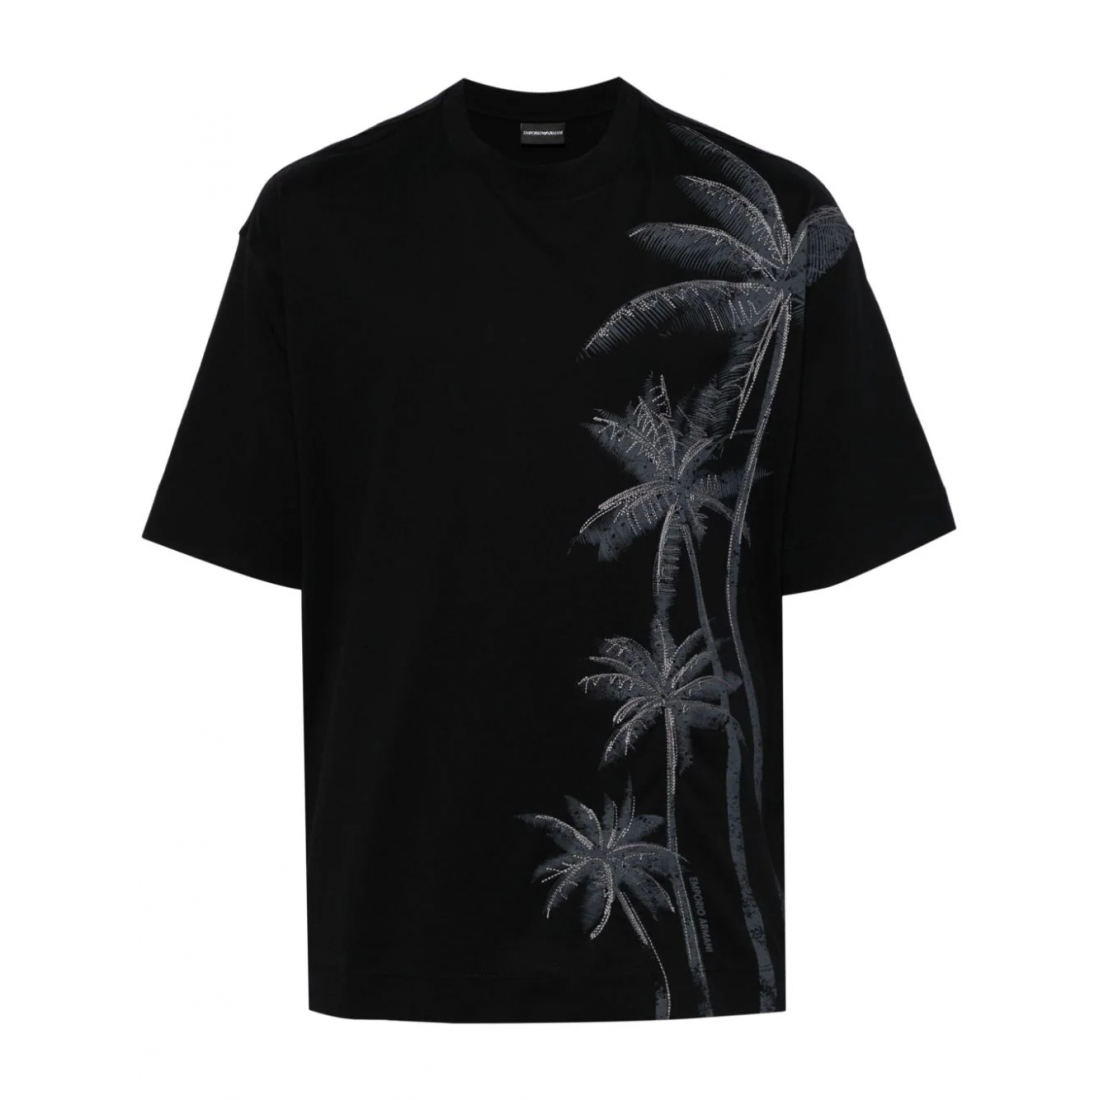 Men's 'Palm-Tree' T-Shirt